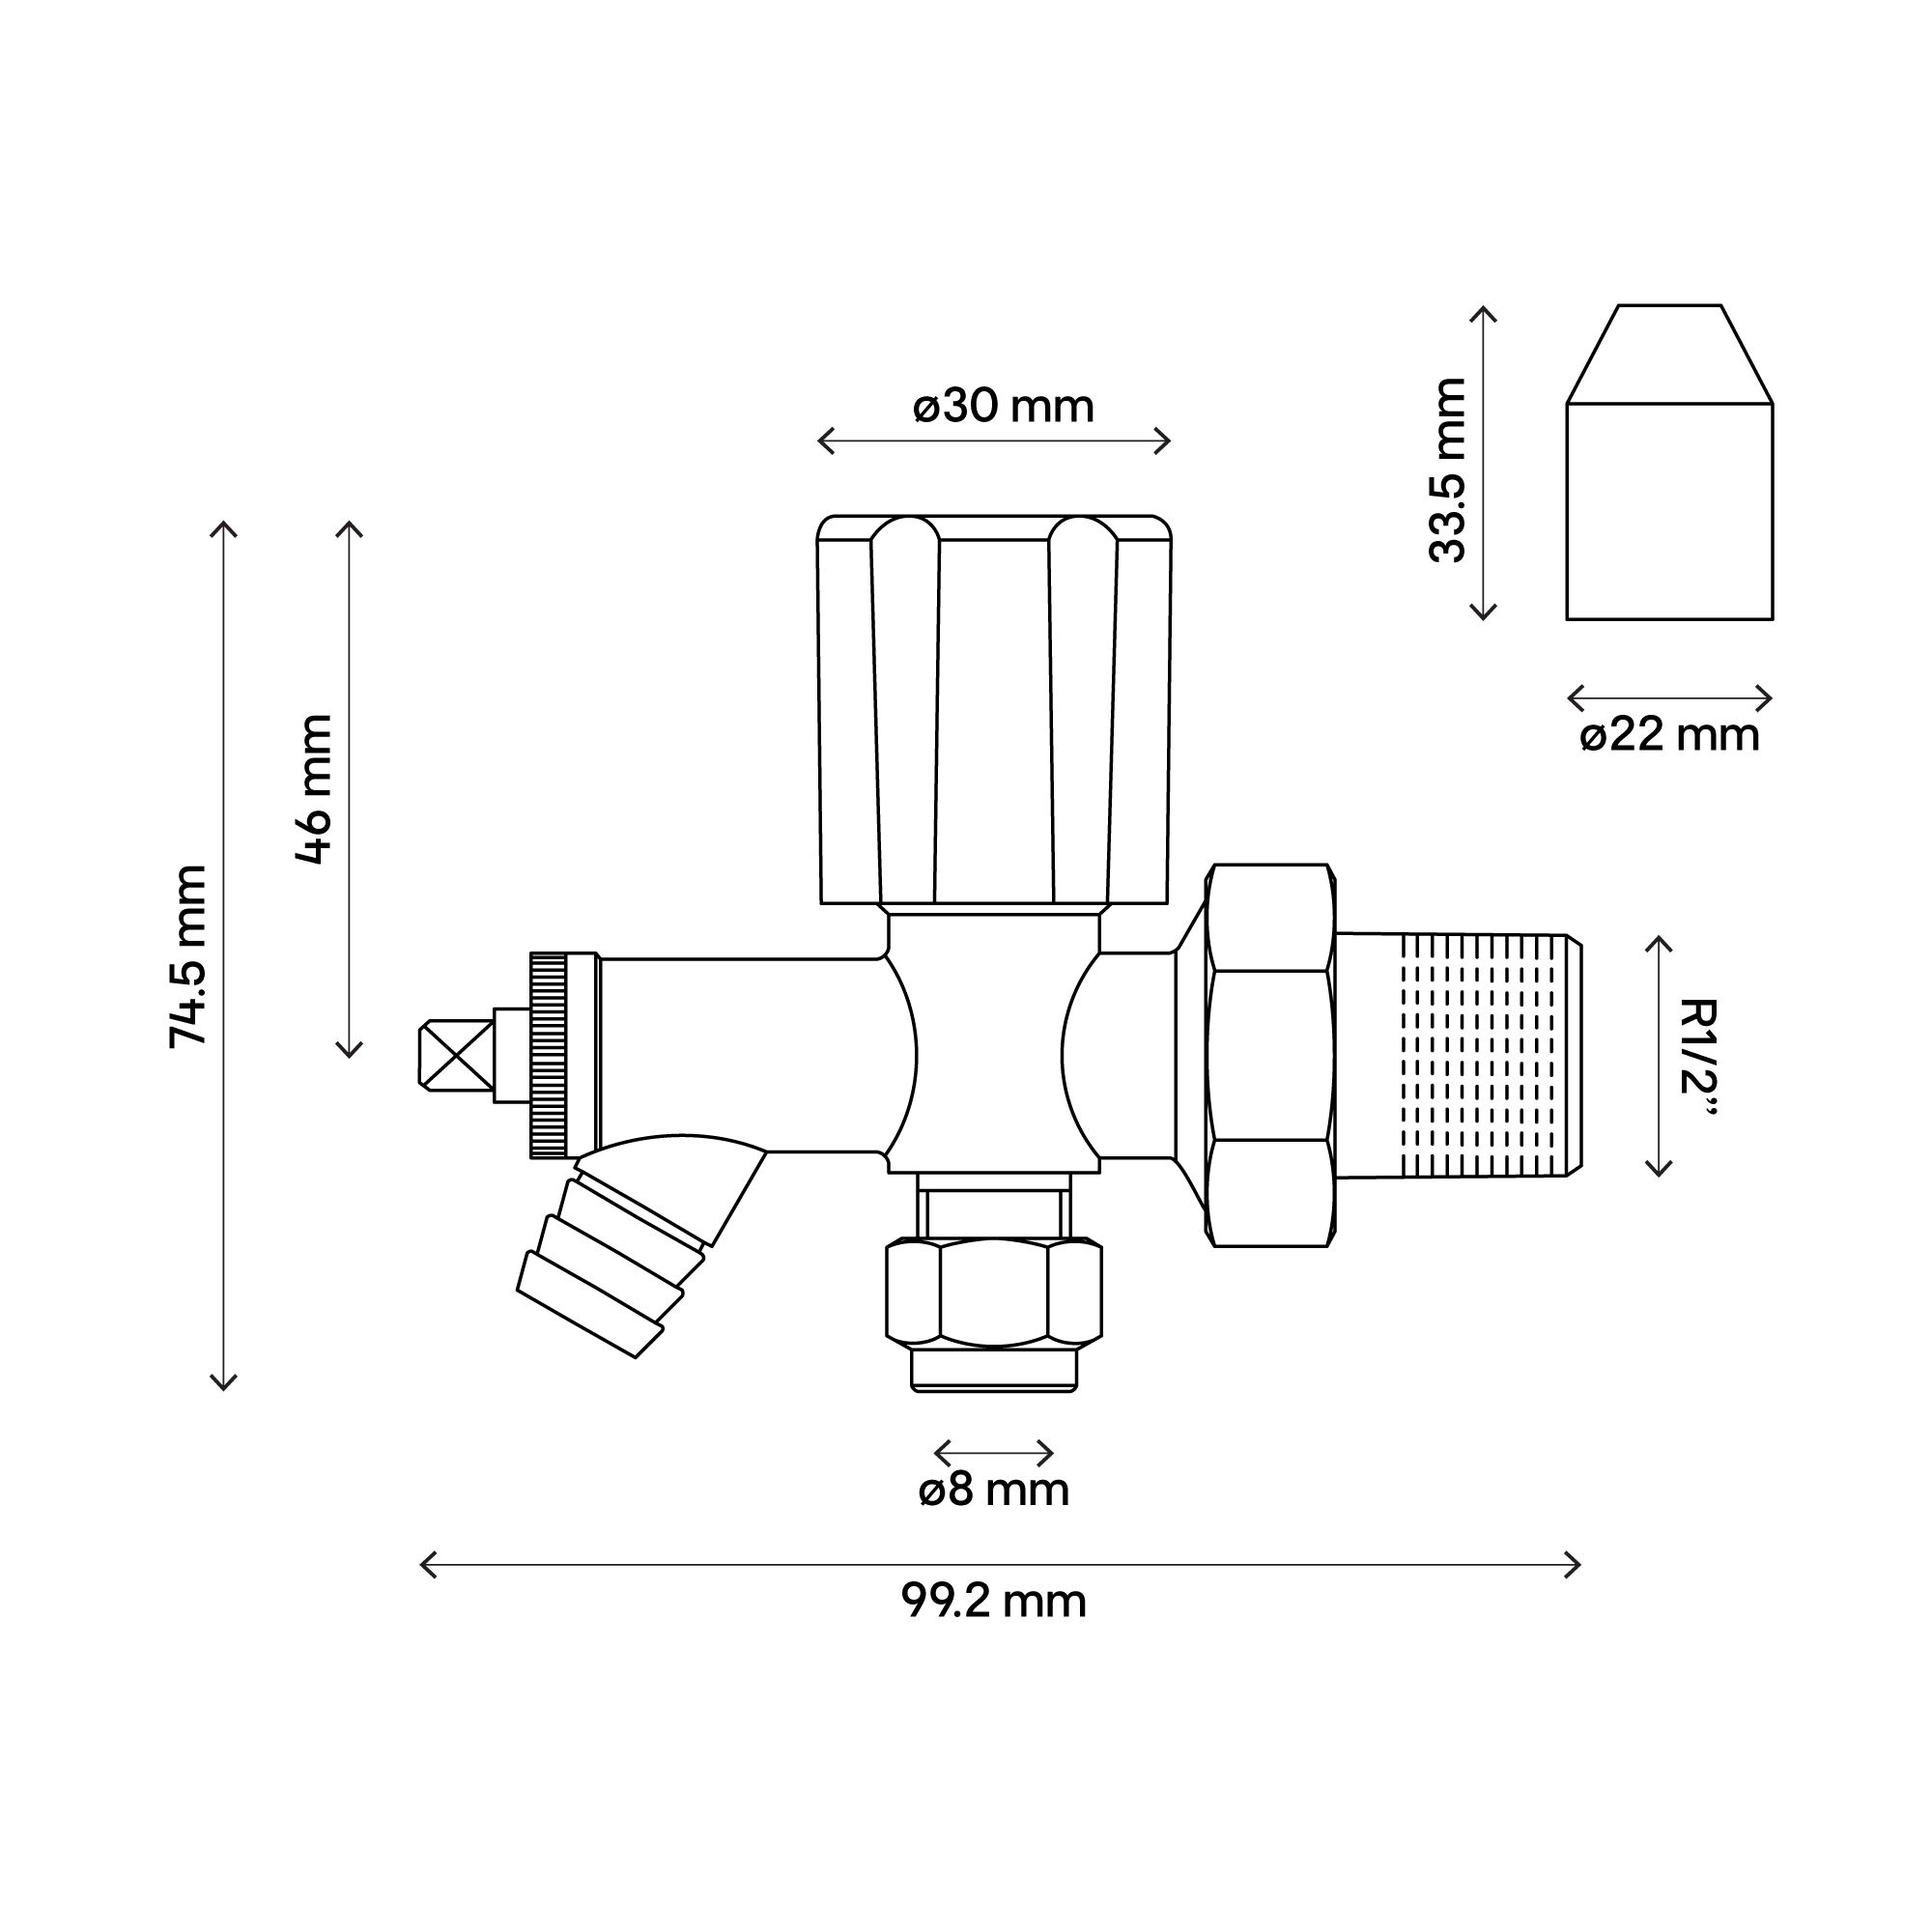 Flomasta Gloss chrome effect Angled Manual Radiator valve & drain off x ½" (Dia) 8mm